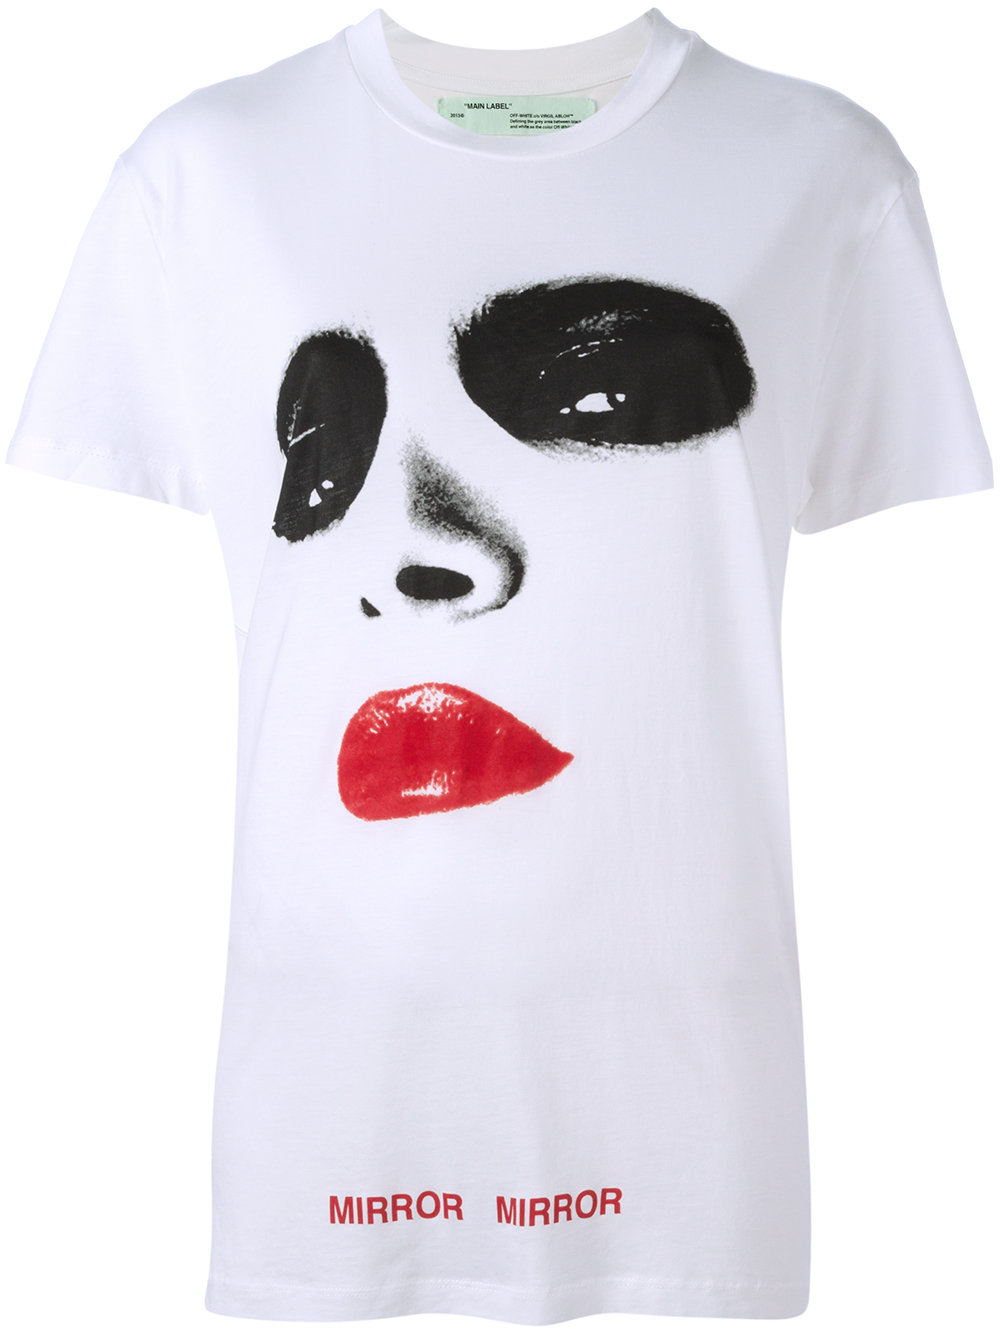 Off-White \'mirror mirror\' print T-shirt Cheap BIANCO Women Clothing T-shirts & Jerseys